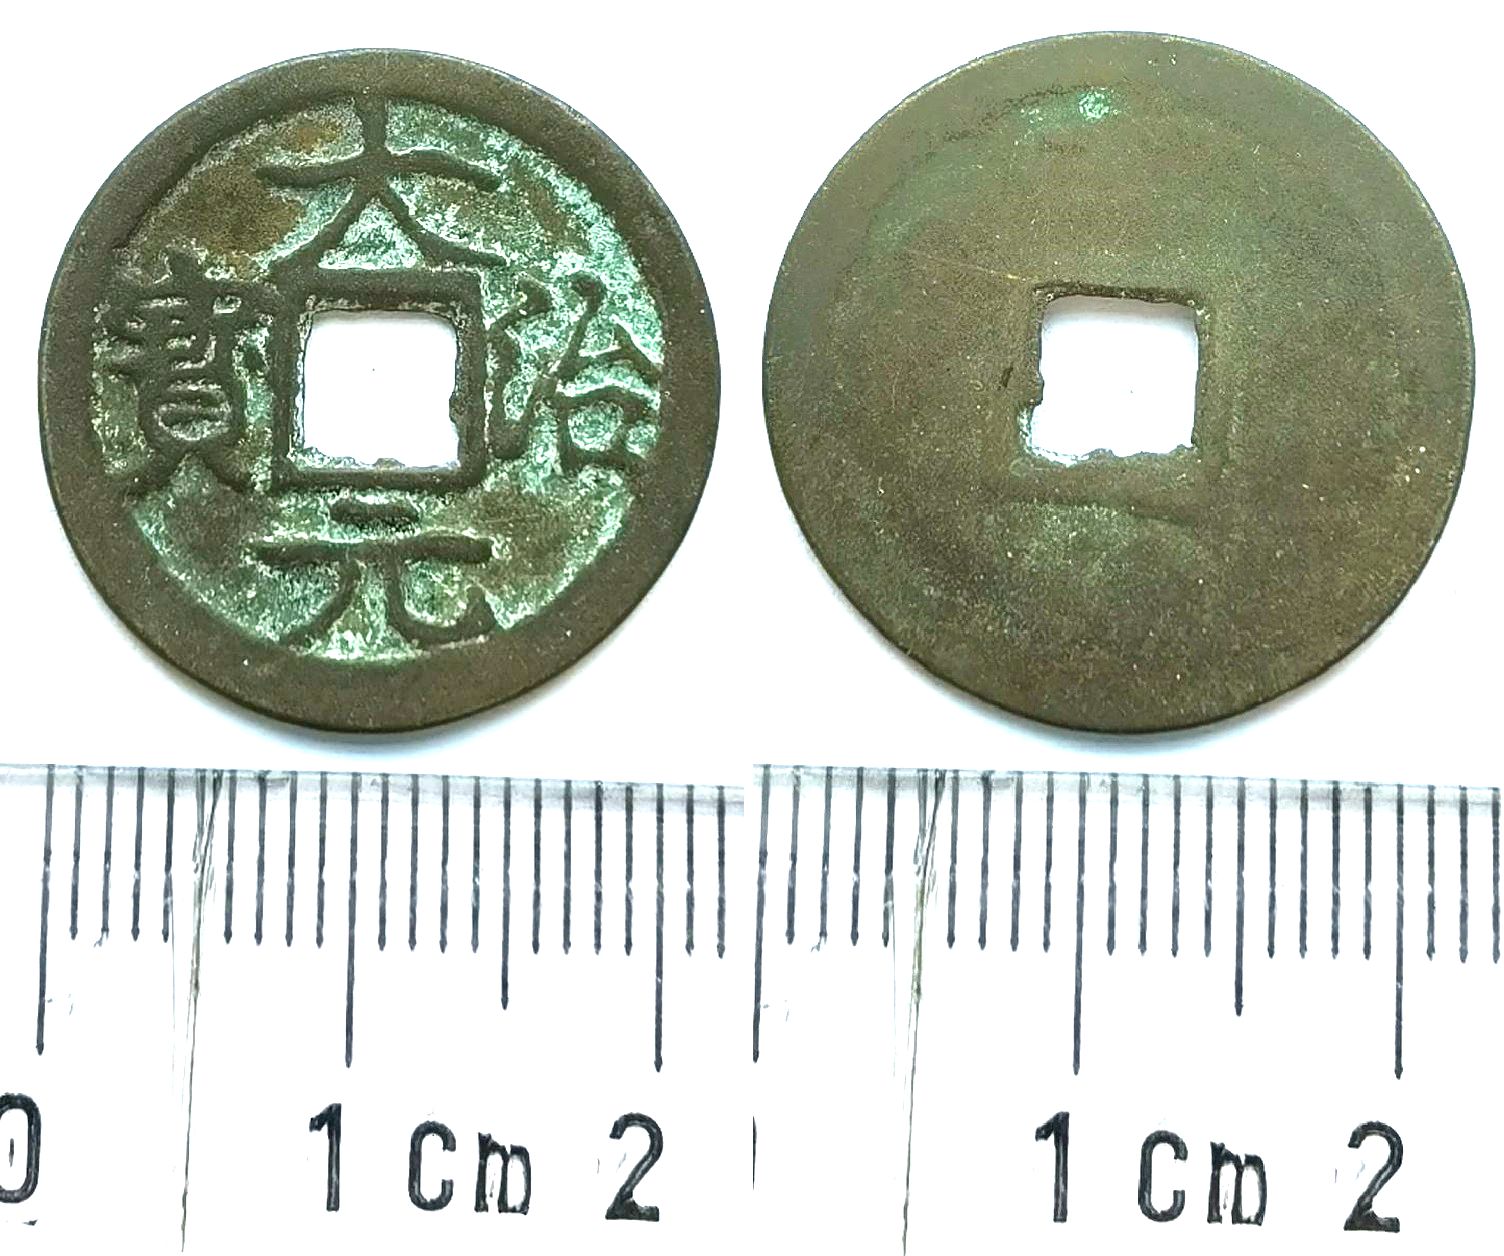 V1040, Annam Dai-Tri Nguyen-Bao (Da Zhi), Model Script, AD 1358-1368